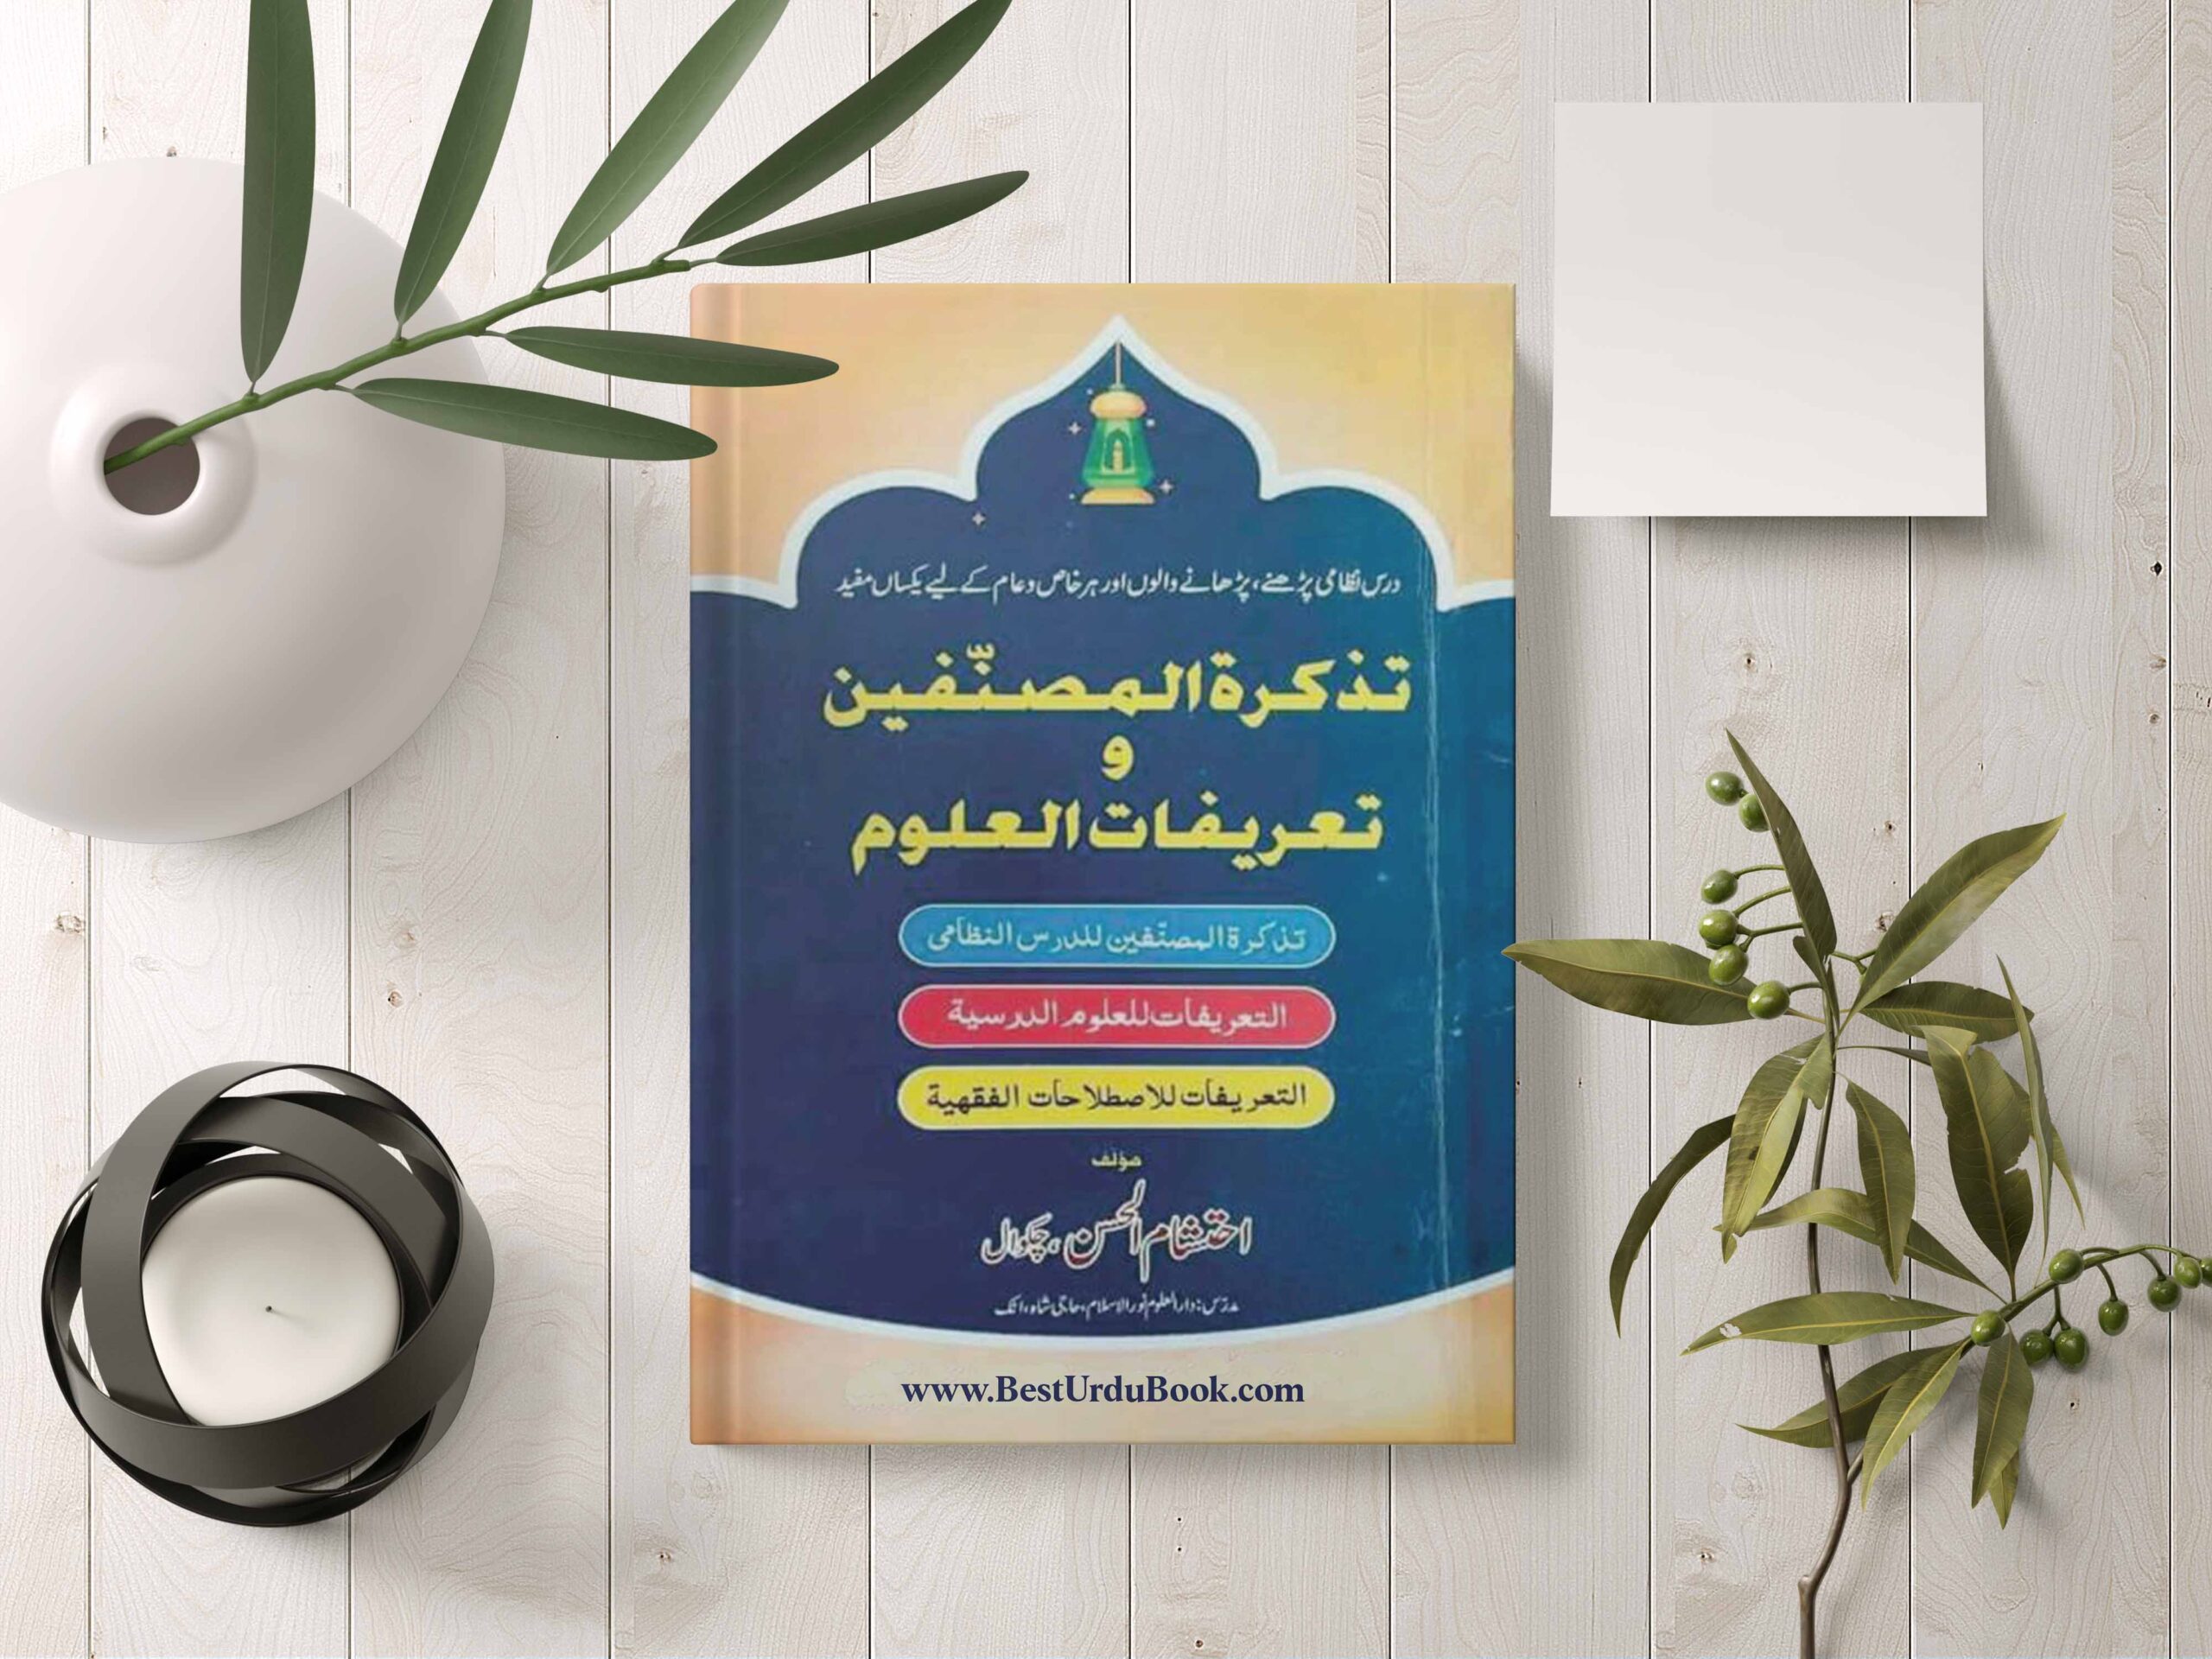 Tazkira tul Musannifeen Book Download In Urdu & pdf format